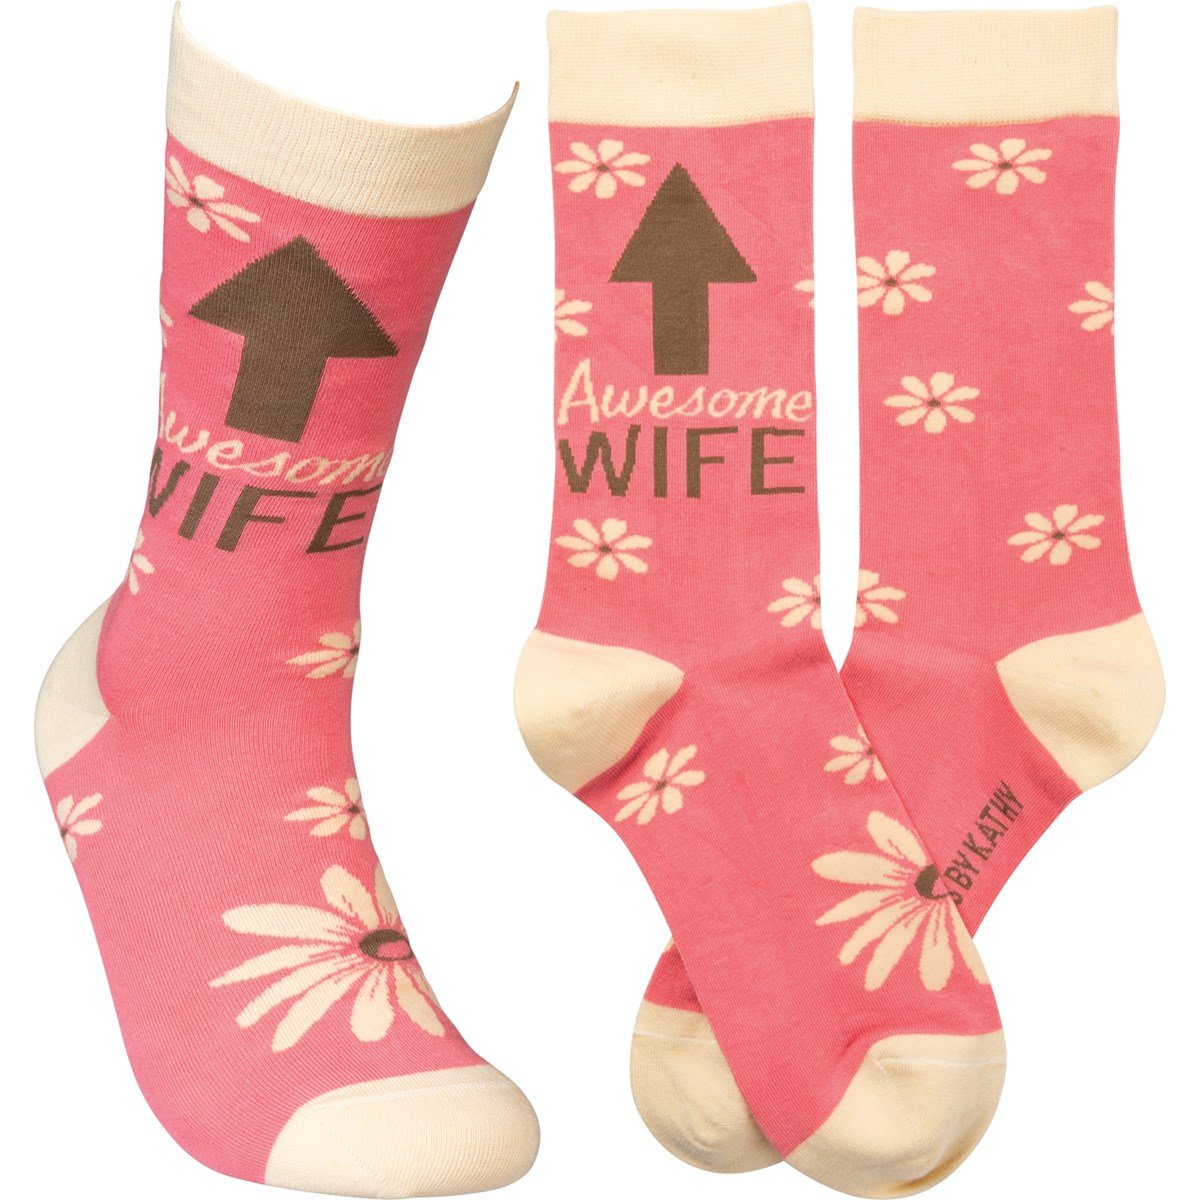 Awesome Wife Crew Socks